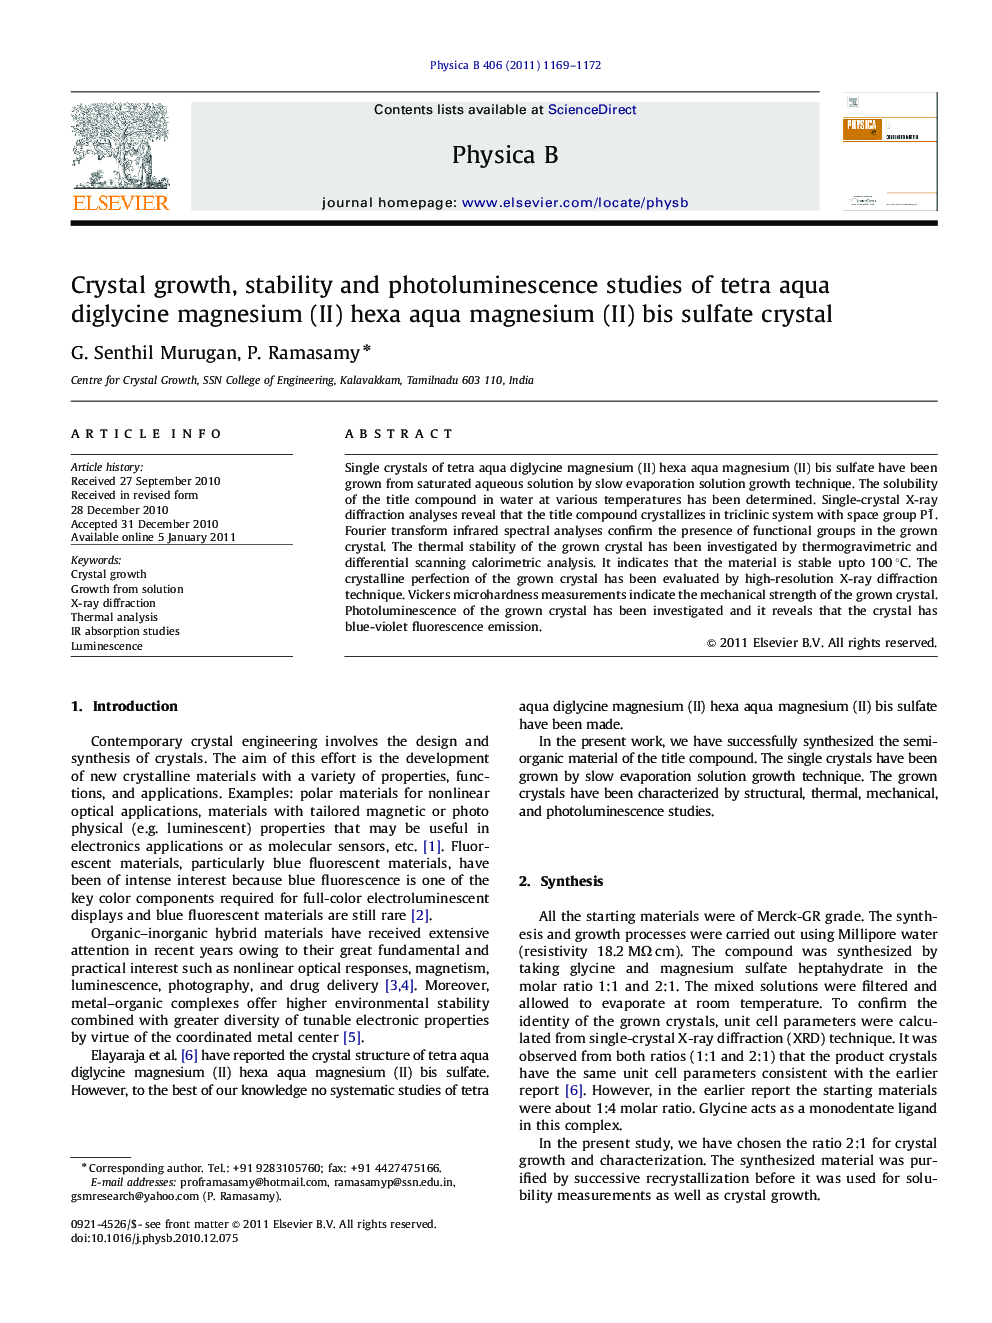 Crystal growth, stability and photoluminescence studies of tetra aqua diglycine magnesium (II) hexa aqua magnesium (II) bis sulfate crystal